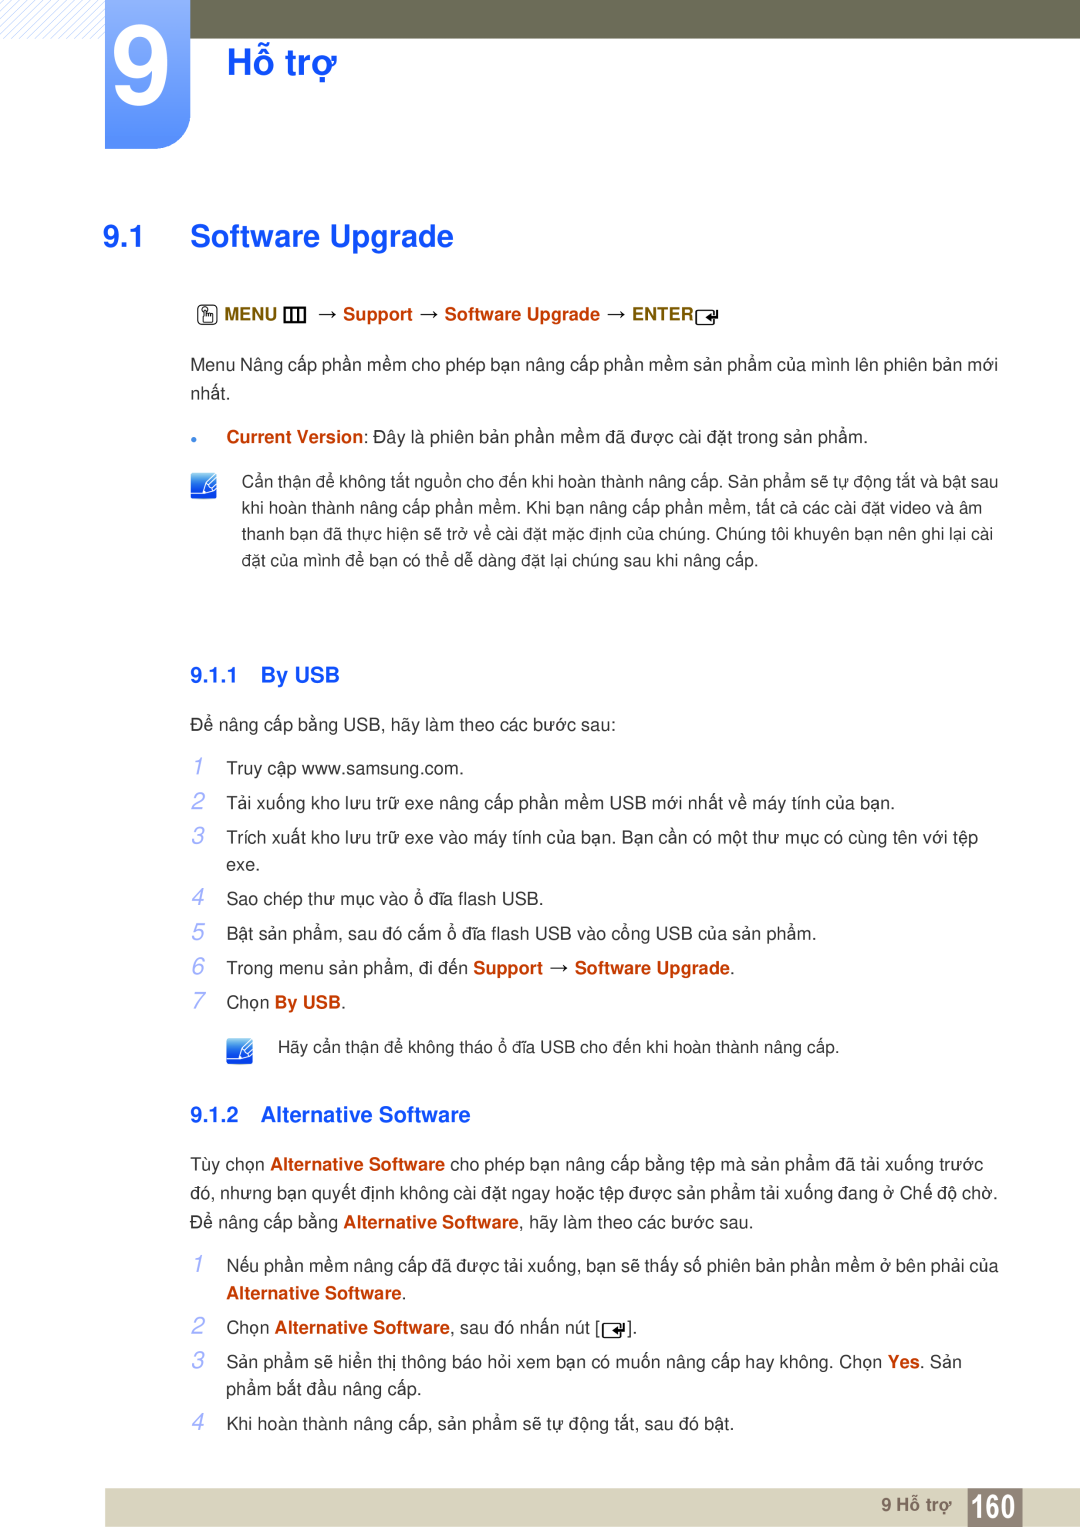 Samsung LH55UEAPLGC/XY, LH46DEPLGC/EN 9 Hỗ trợ, By USB, Alternative Software, O MENU m Support Software Upgrade ENTER 